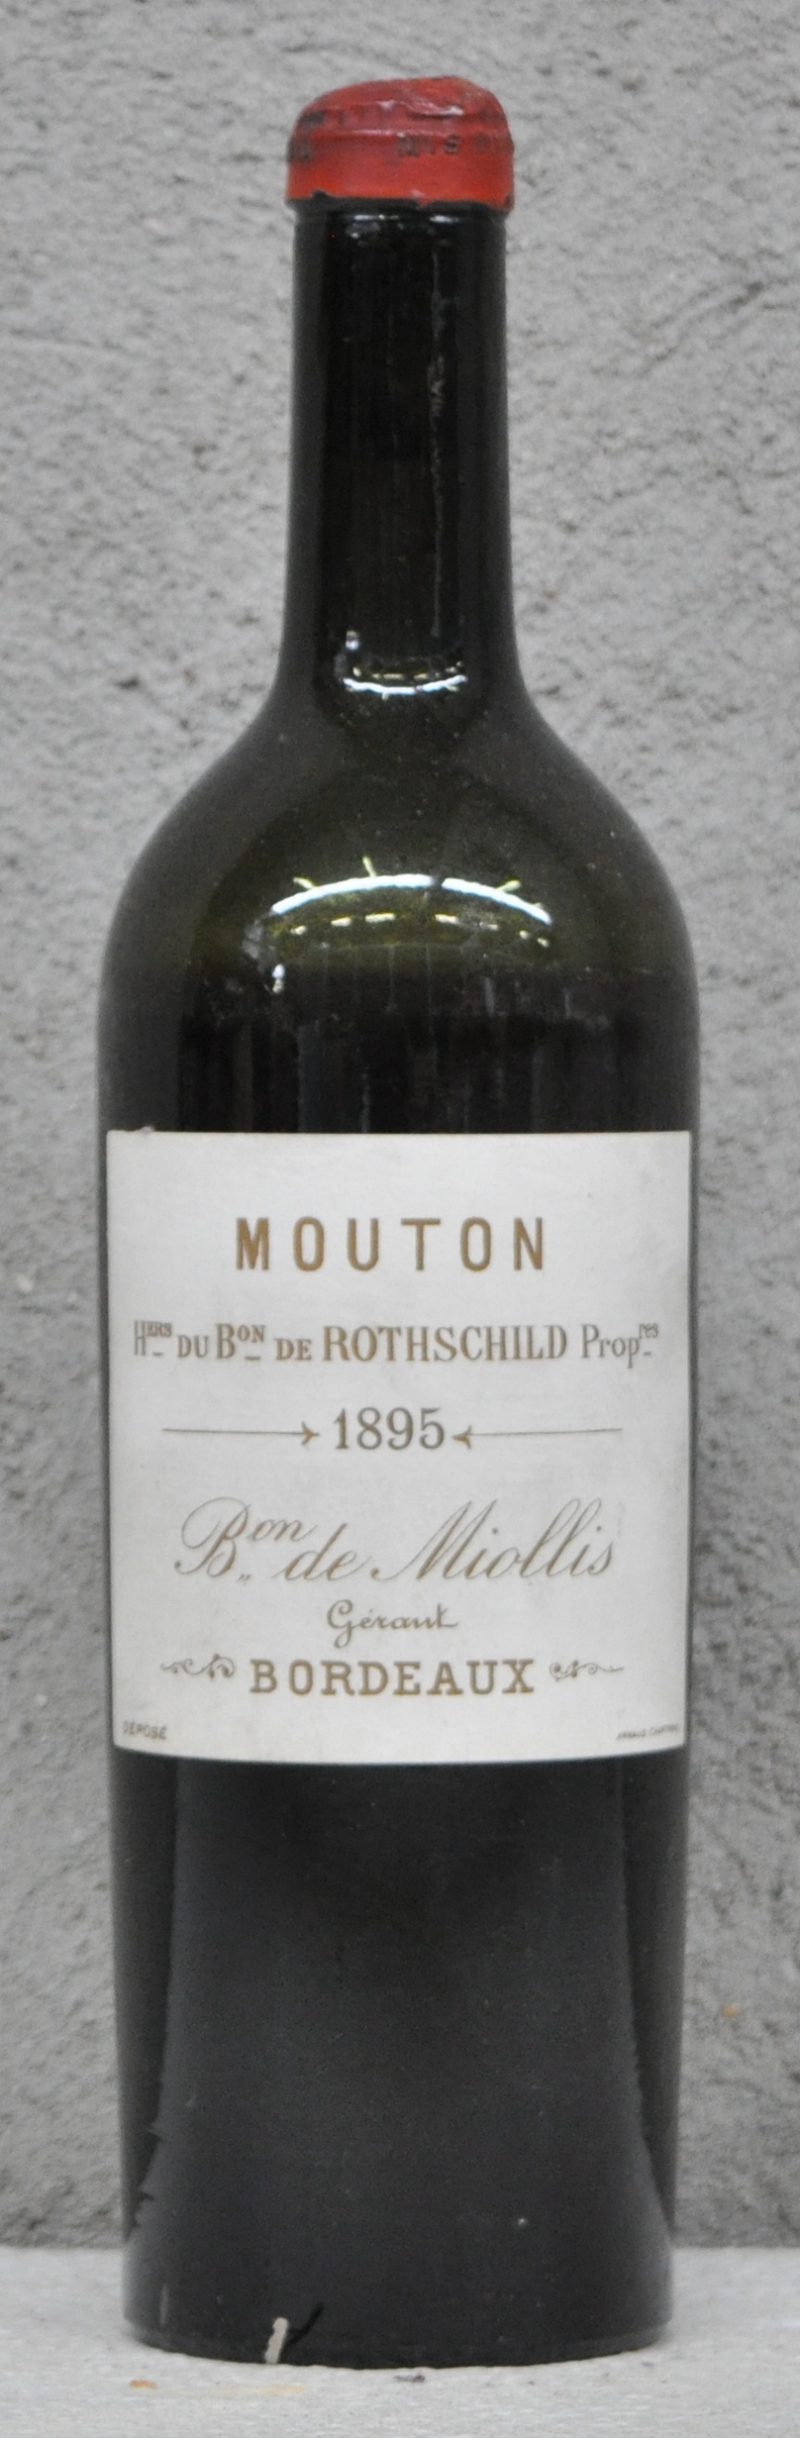 Ch. Mouton-Rothschild   Hers du Bon de Rothschild Propres, Bordeaux   1895  aantal: 1 bt vidange, capsule afgesneden